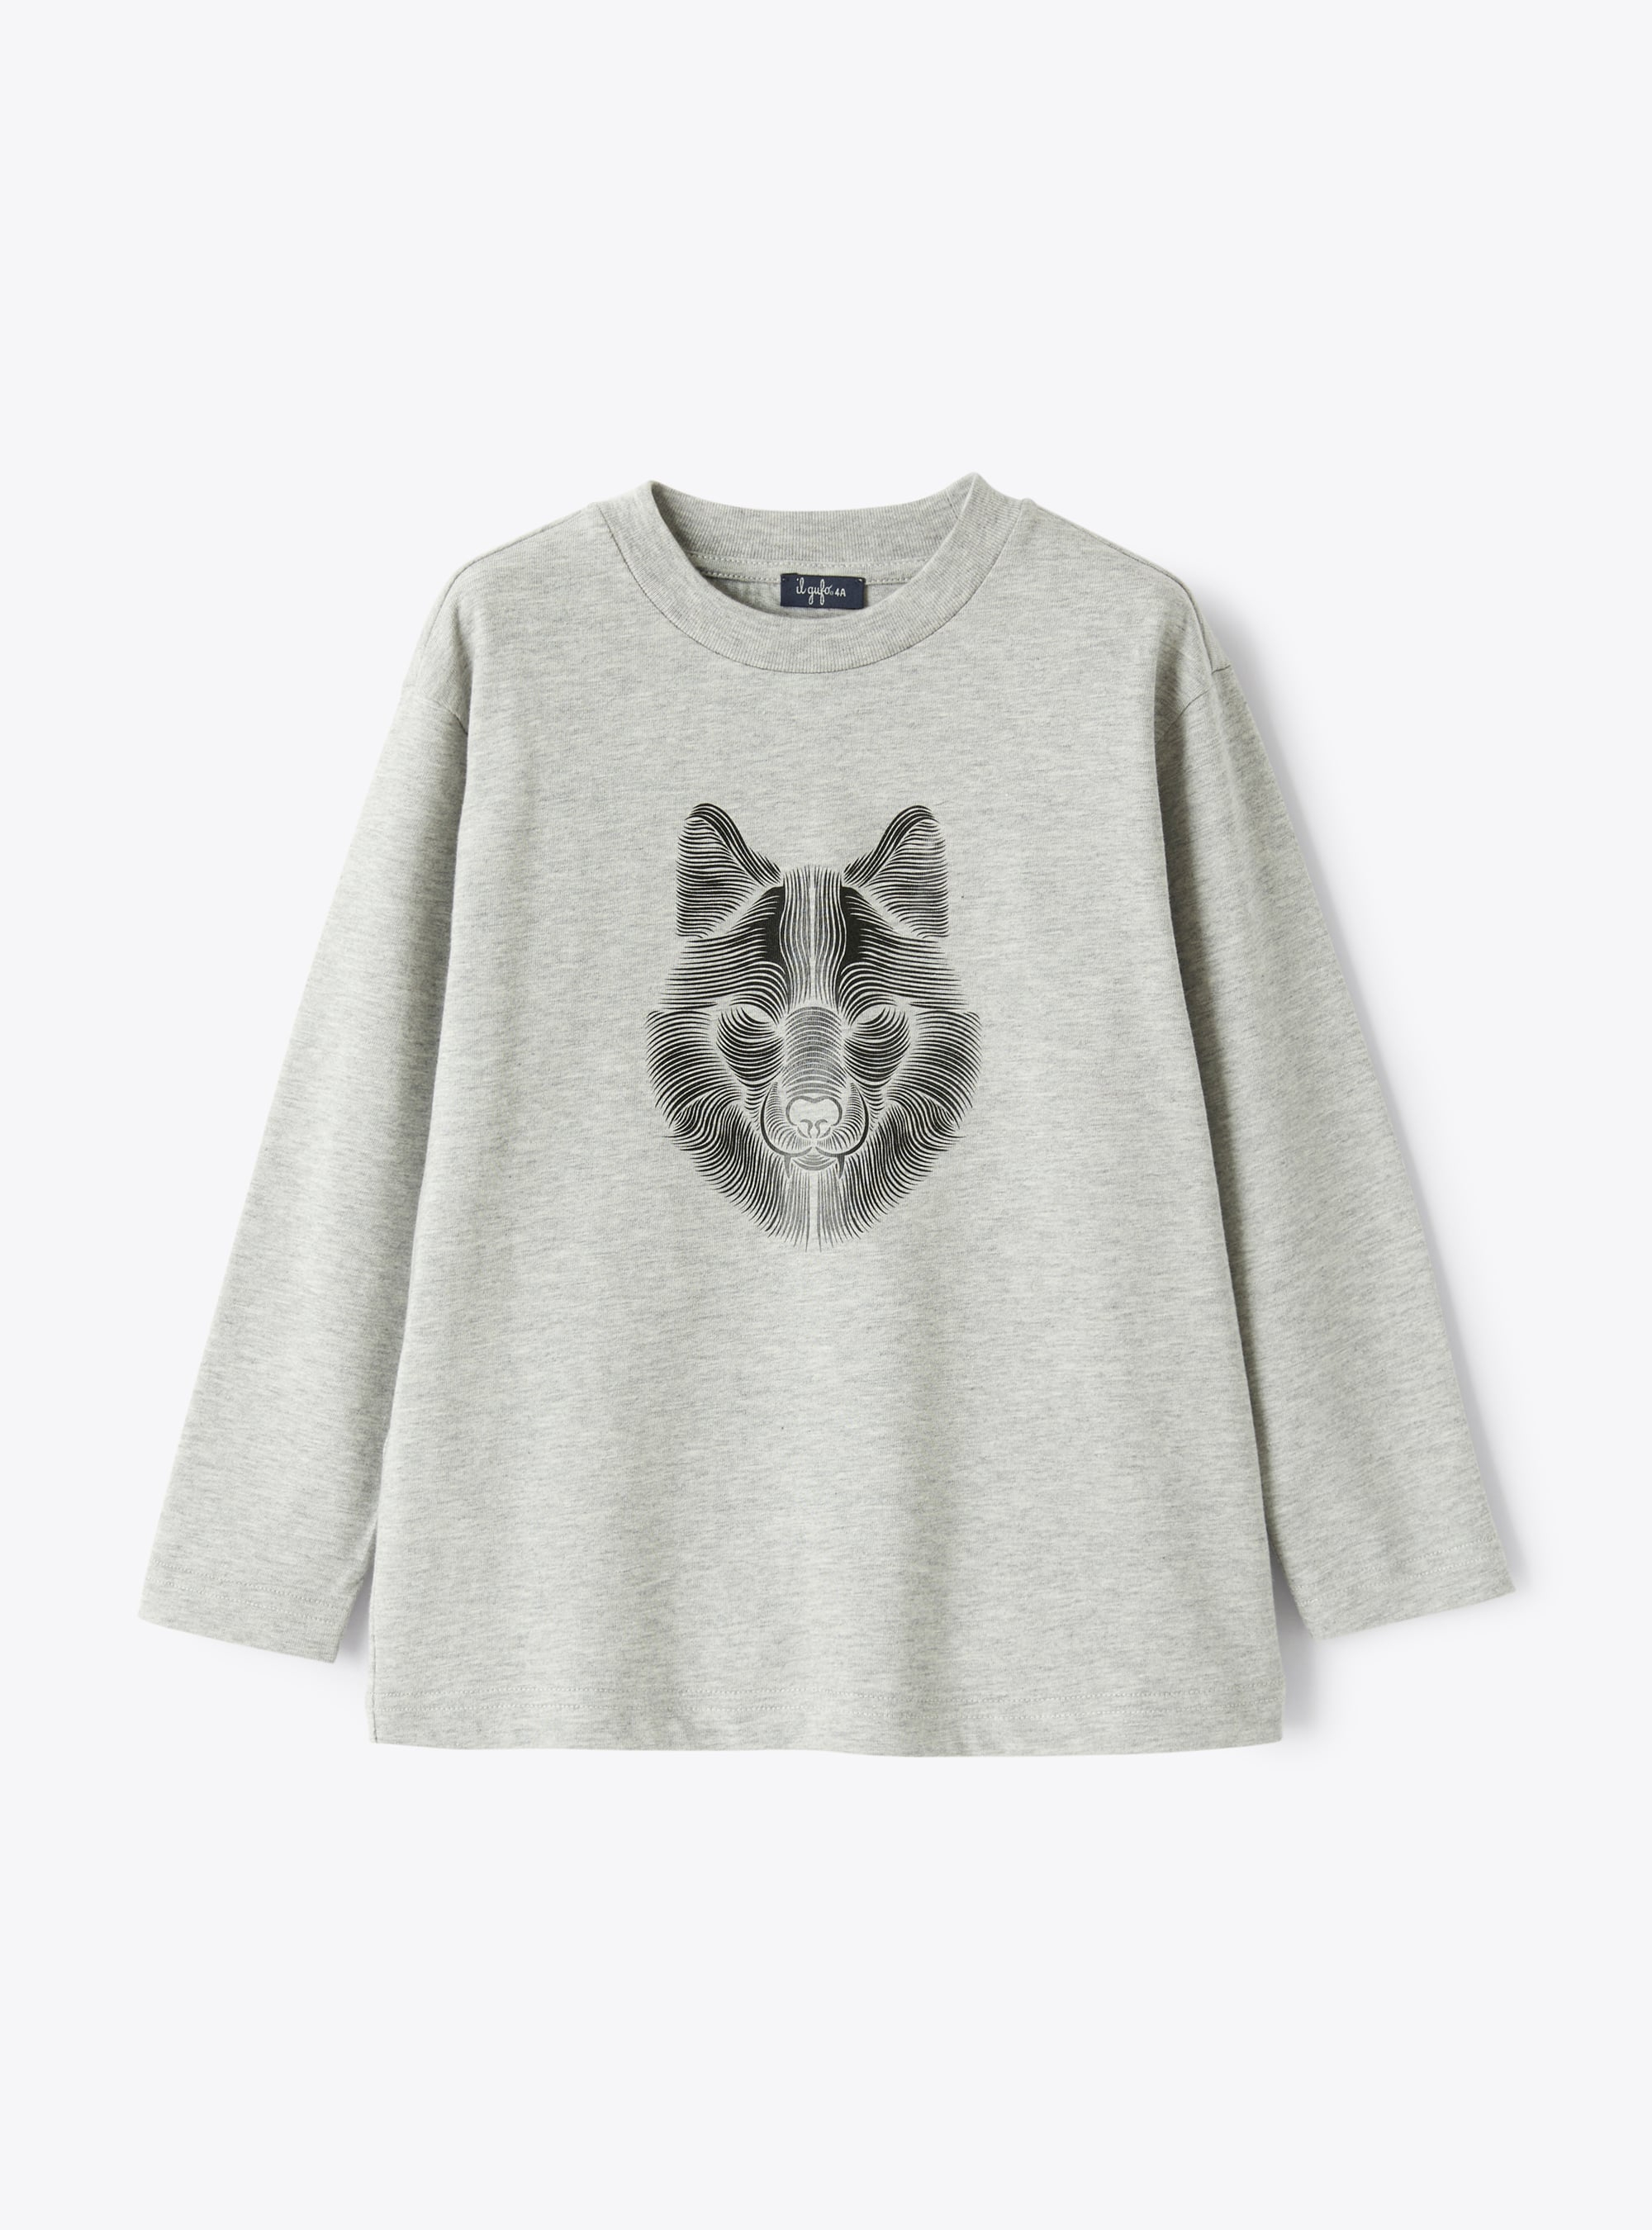 Grey t-shirt with wolf print design - T-shirts - Il Gufo